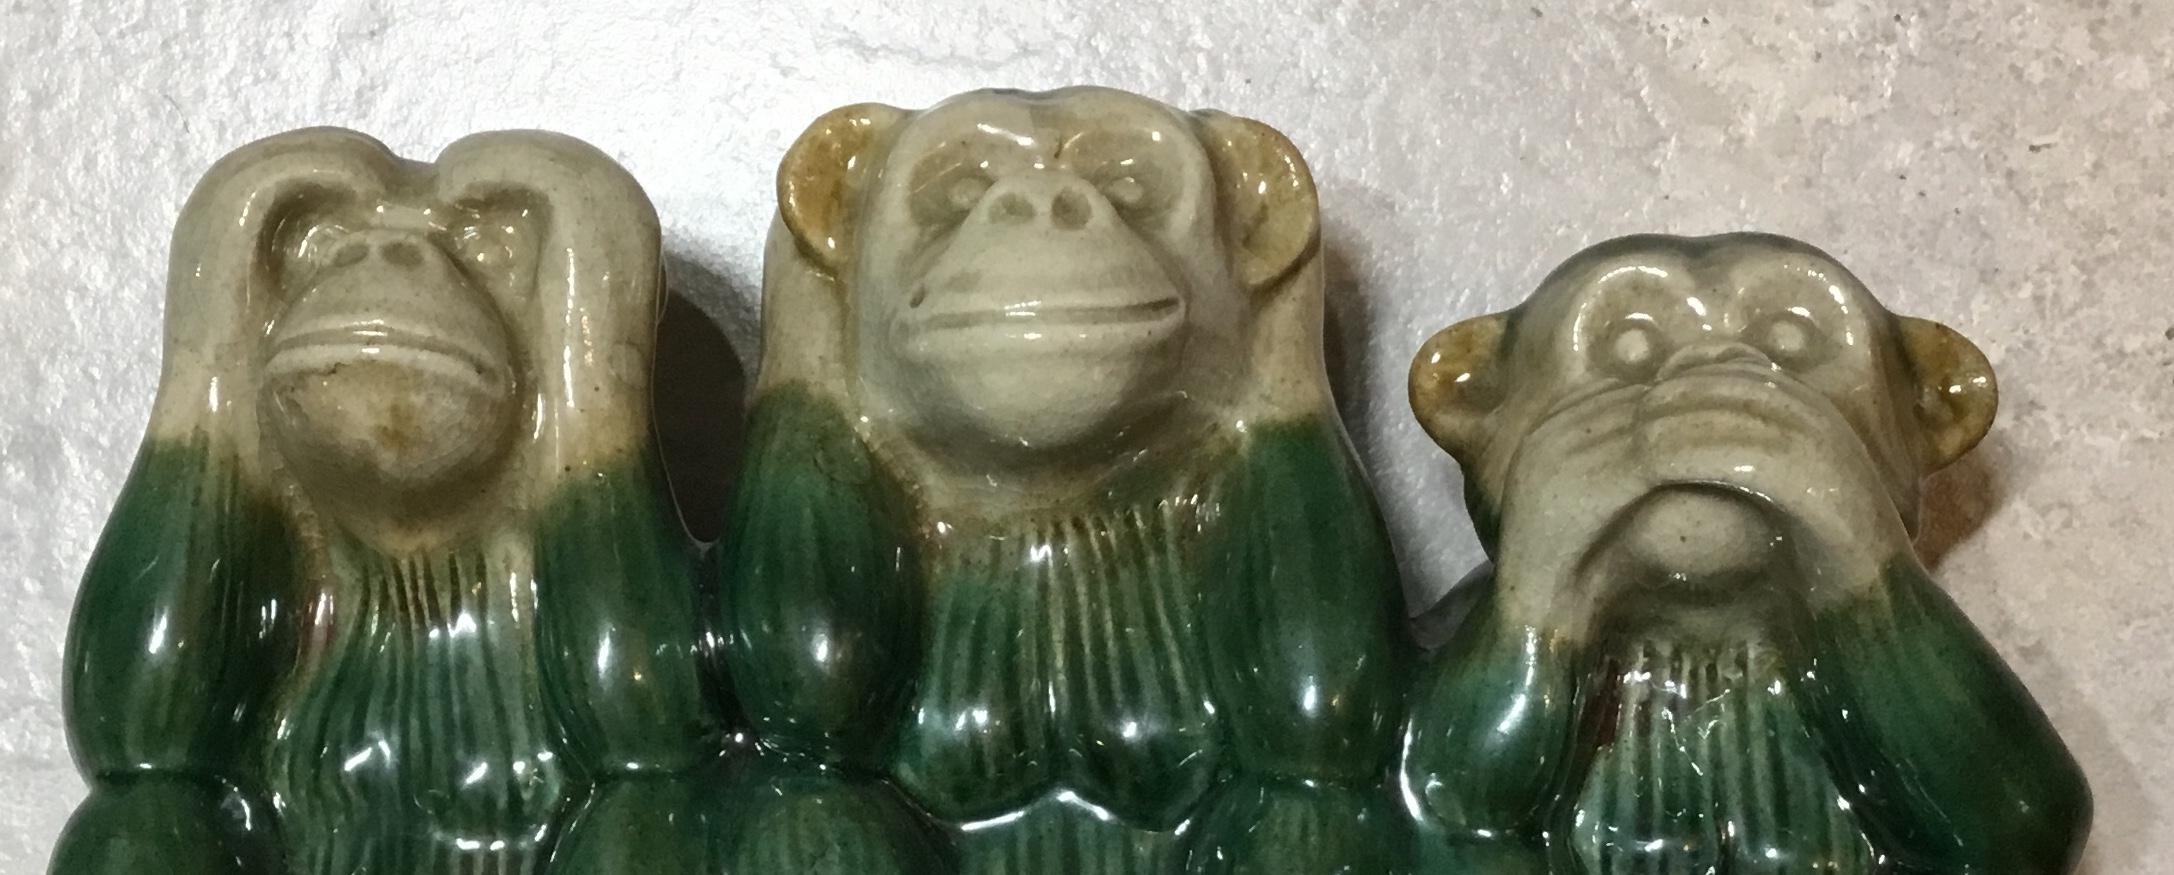 Mid-20th Century Vintage Ceramic of the Three Monkey